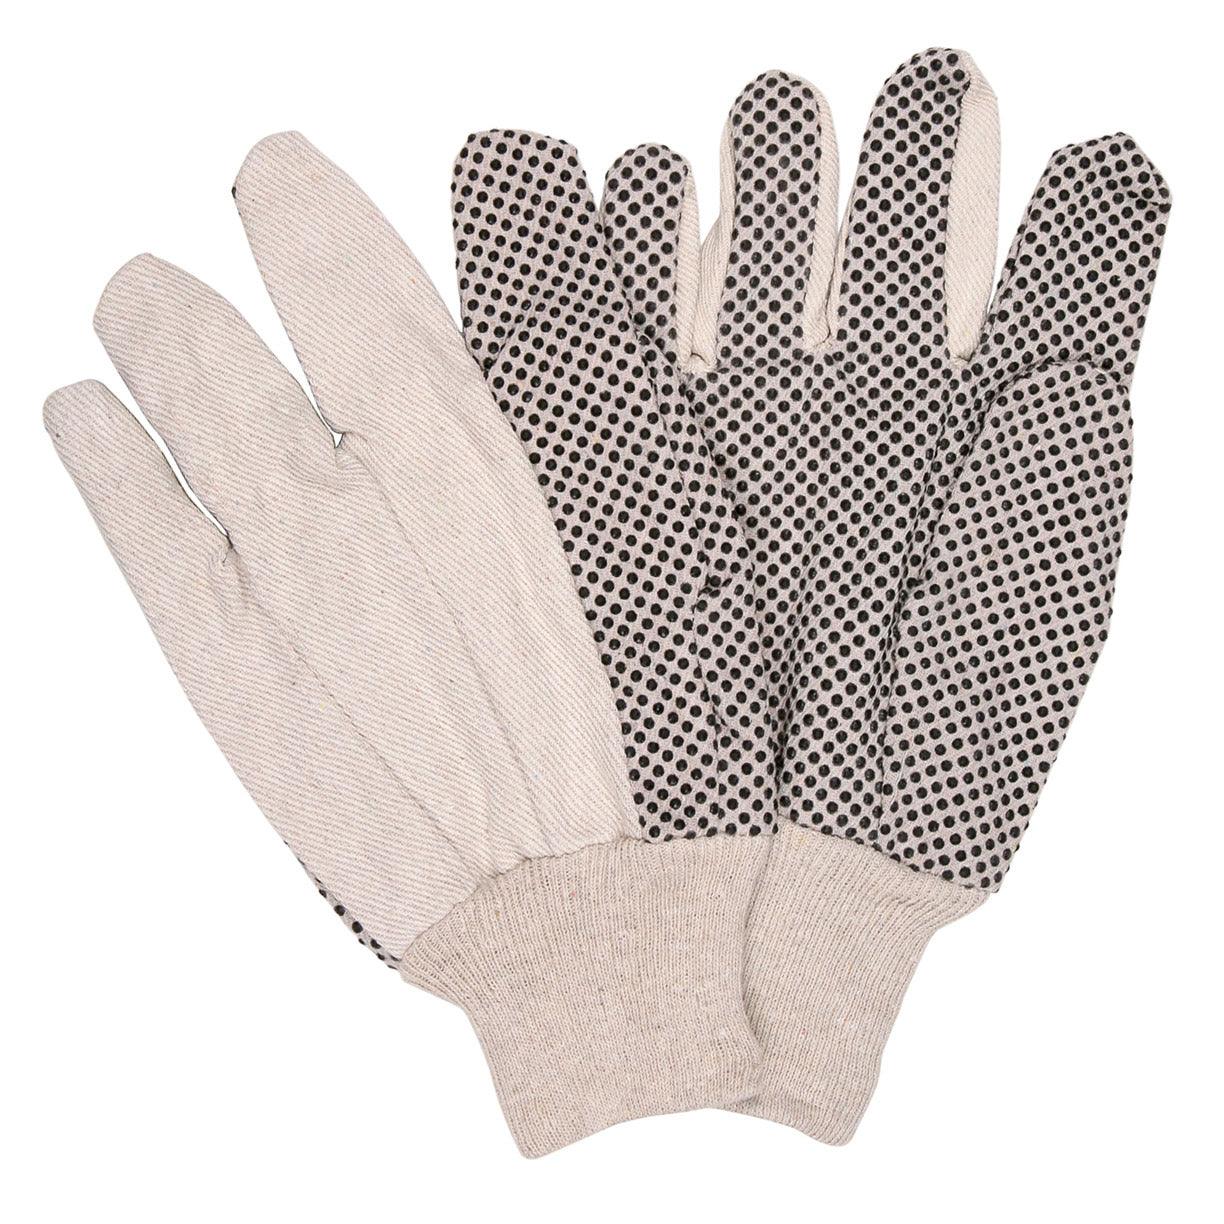 Memphis Dotted Canvas Gloves Medium Weight Cotton, Knit Wrist, 8800 & 8800B